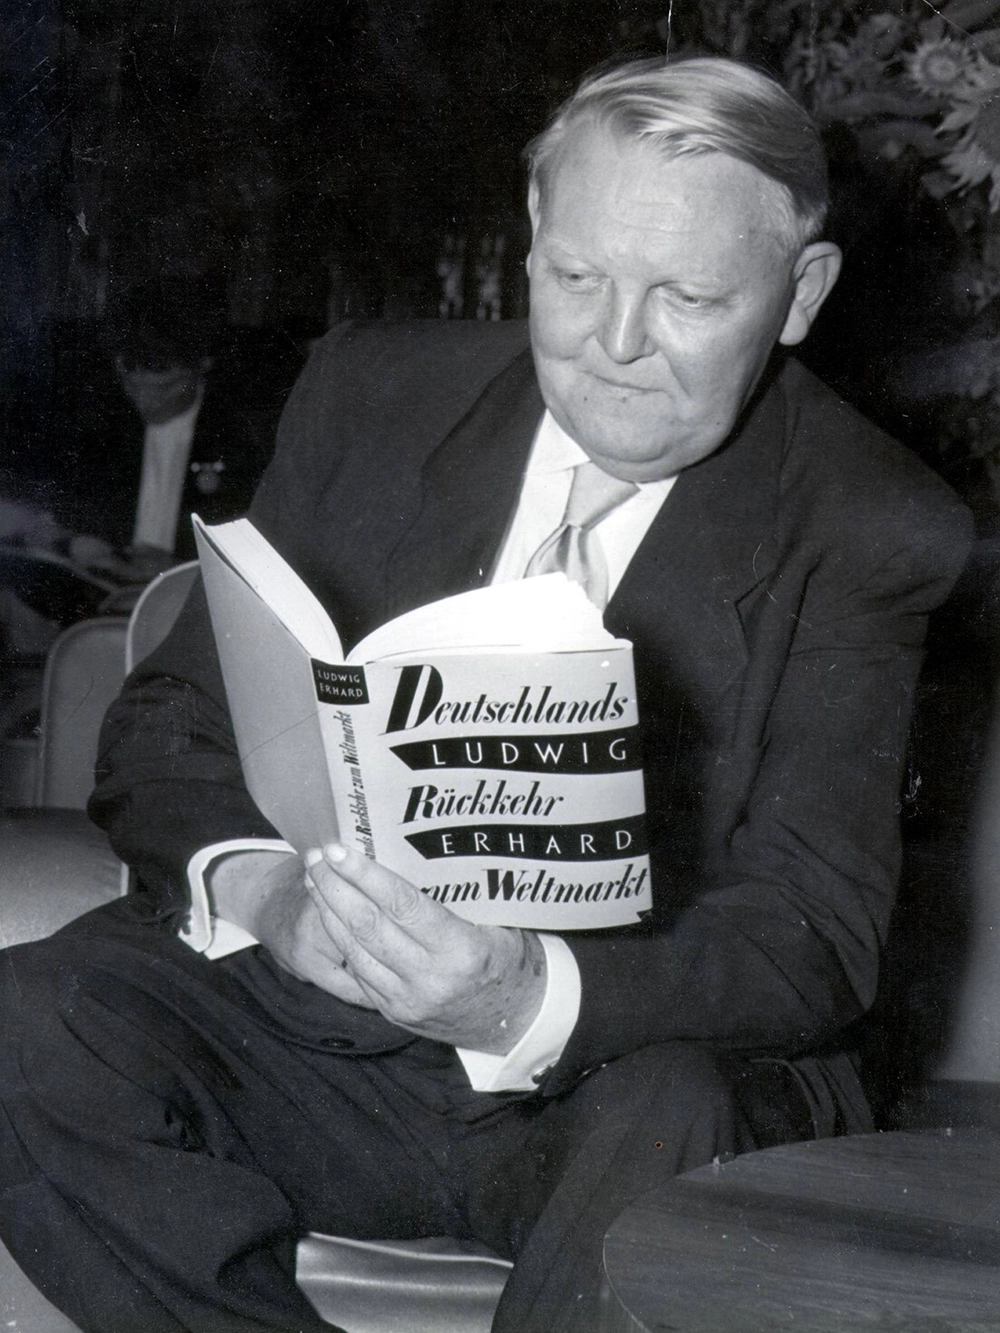 Ludwig Erhard reading his book about the German economic upswing, IMAGO / ZUMA/Keystone